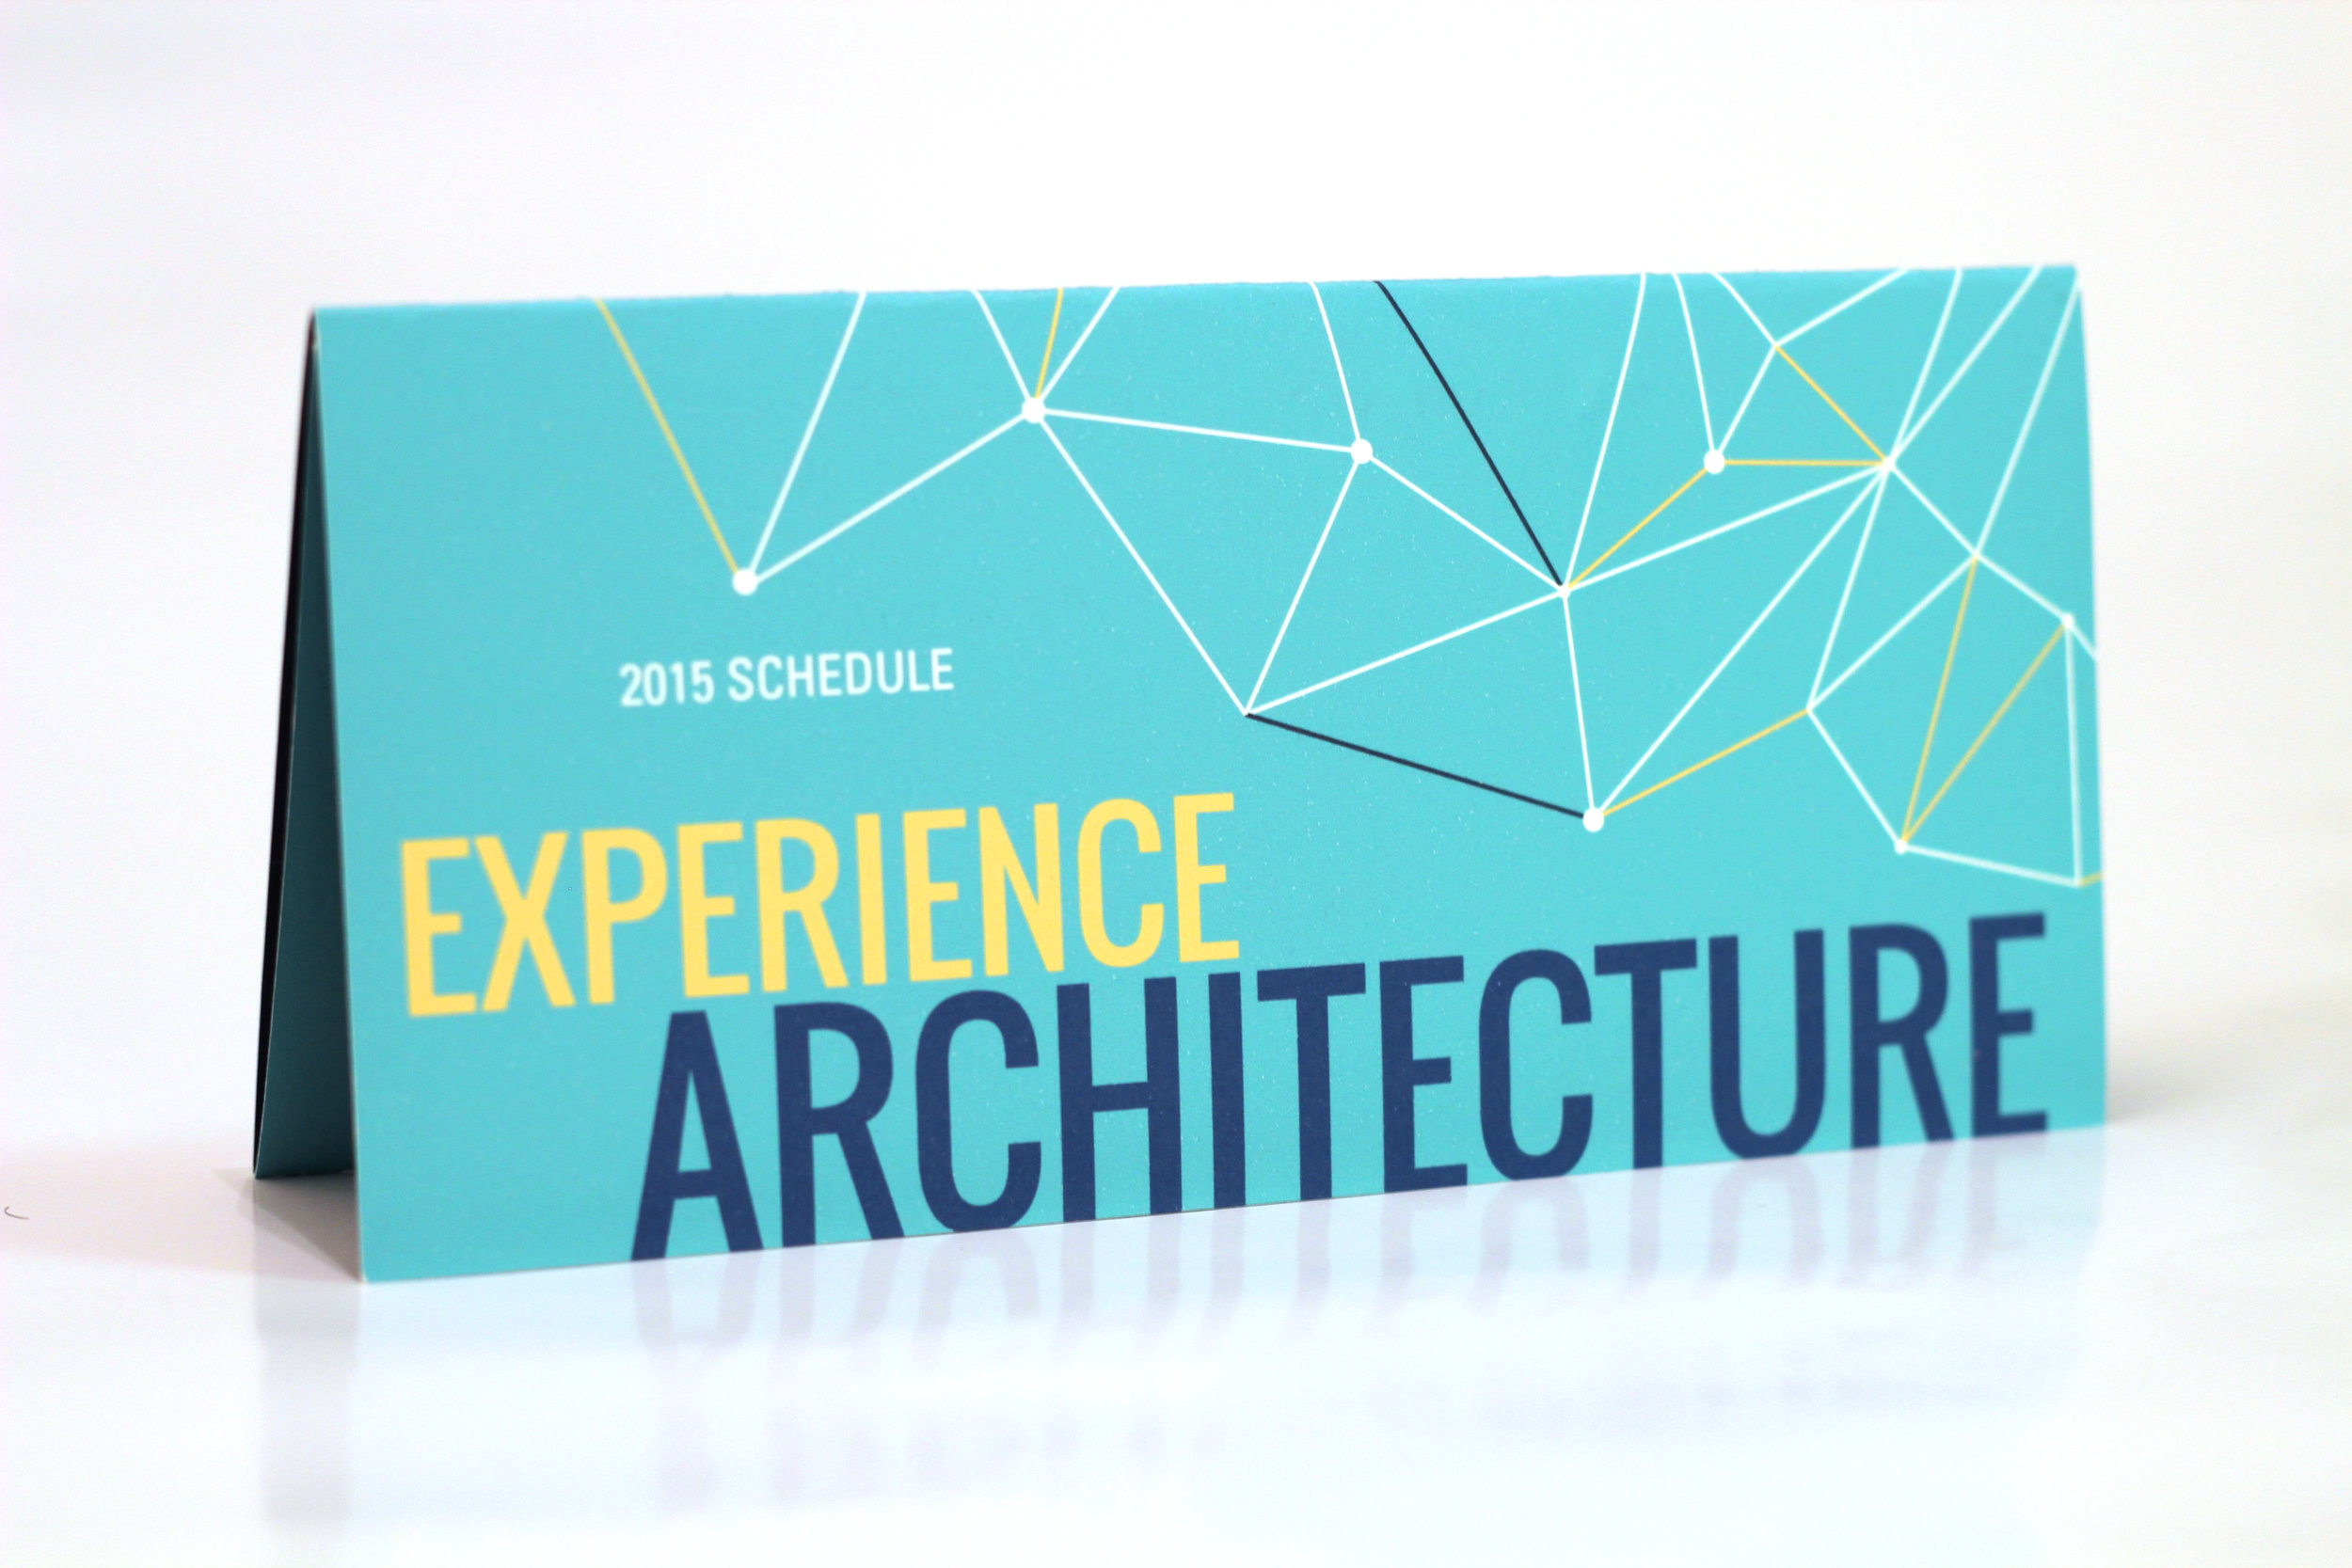 Campaign: Experience Architecture